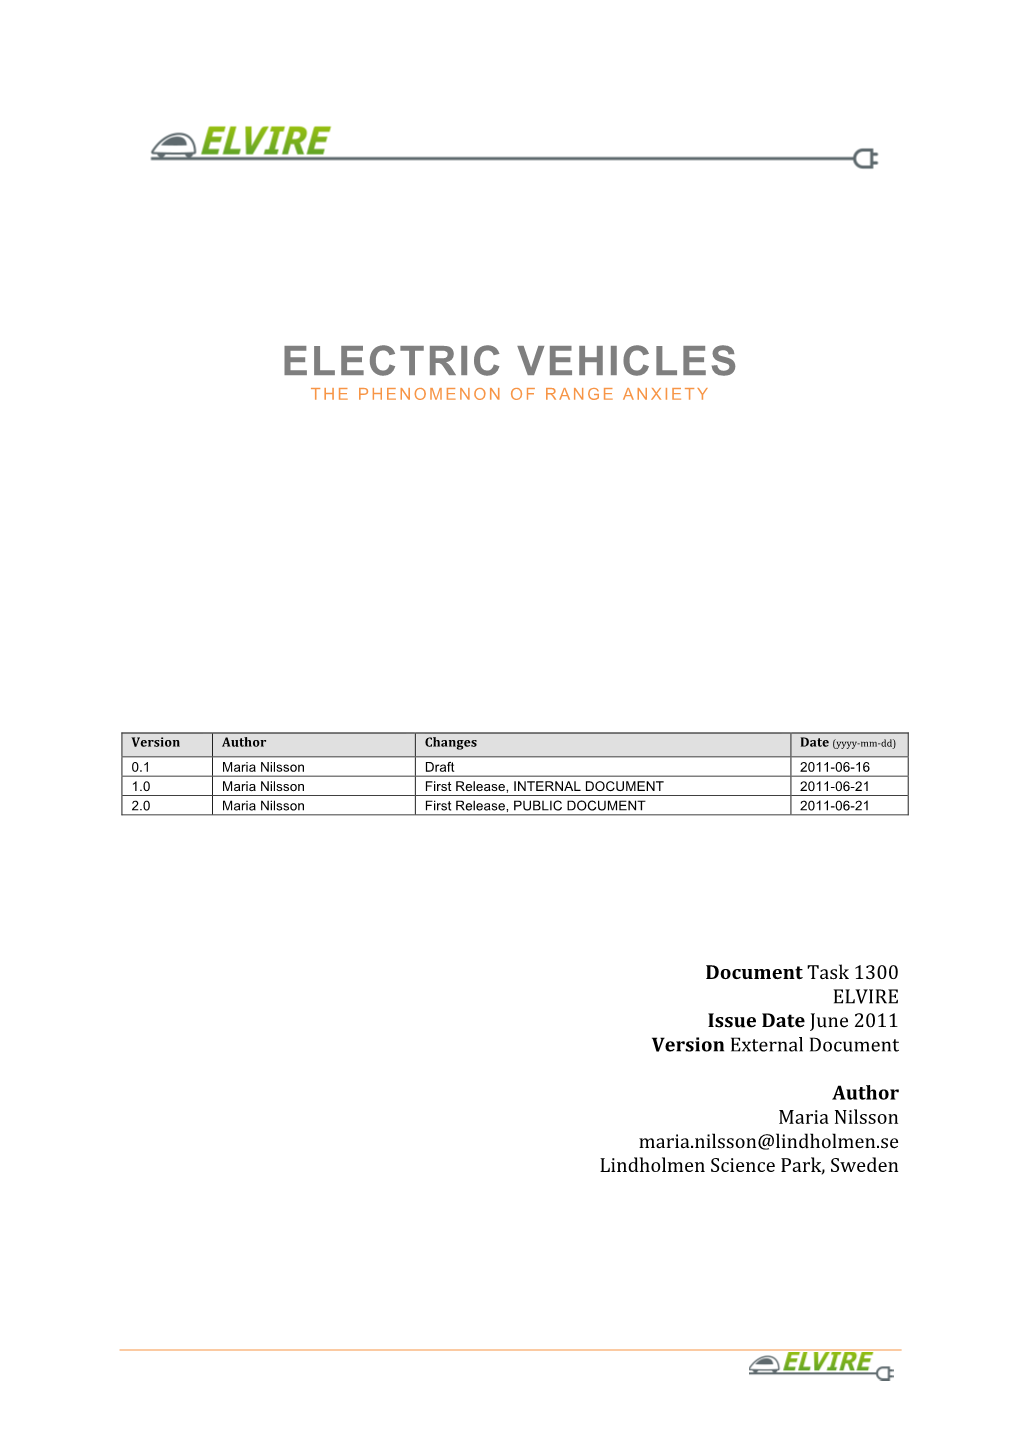 Electric Vehicle: the Phenomenon of Range Anxiety 2011